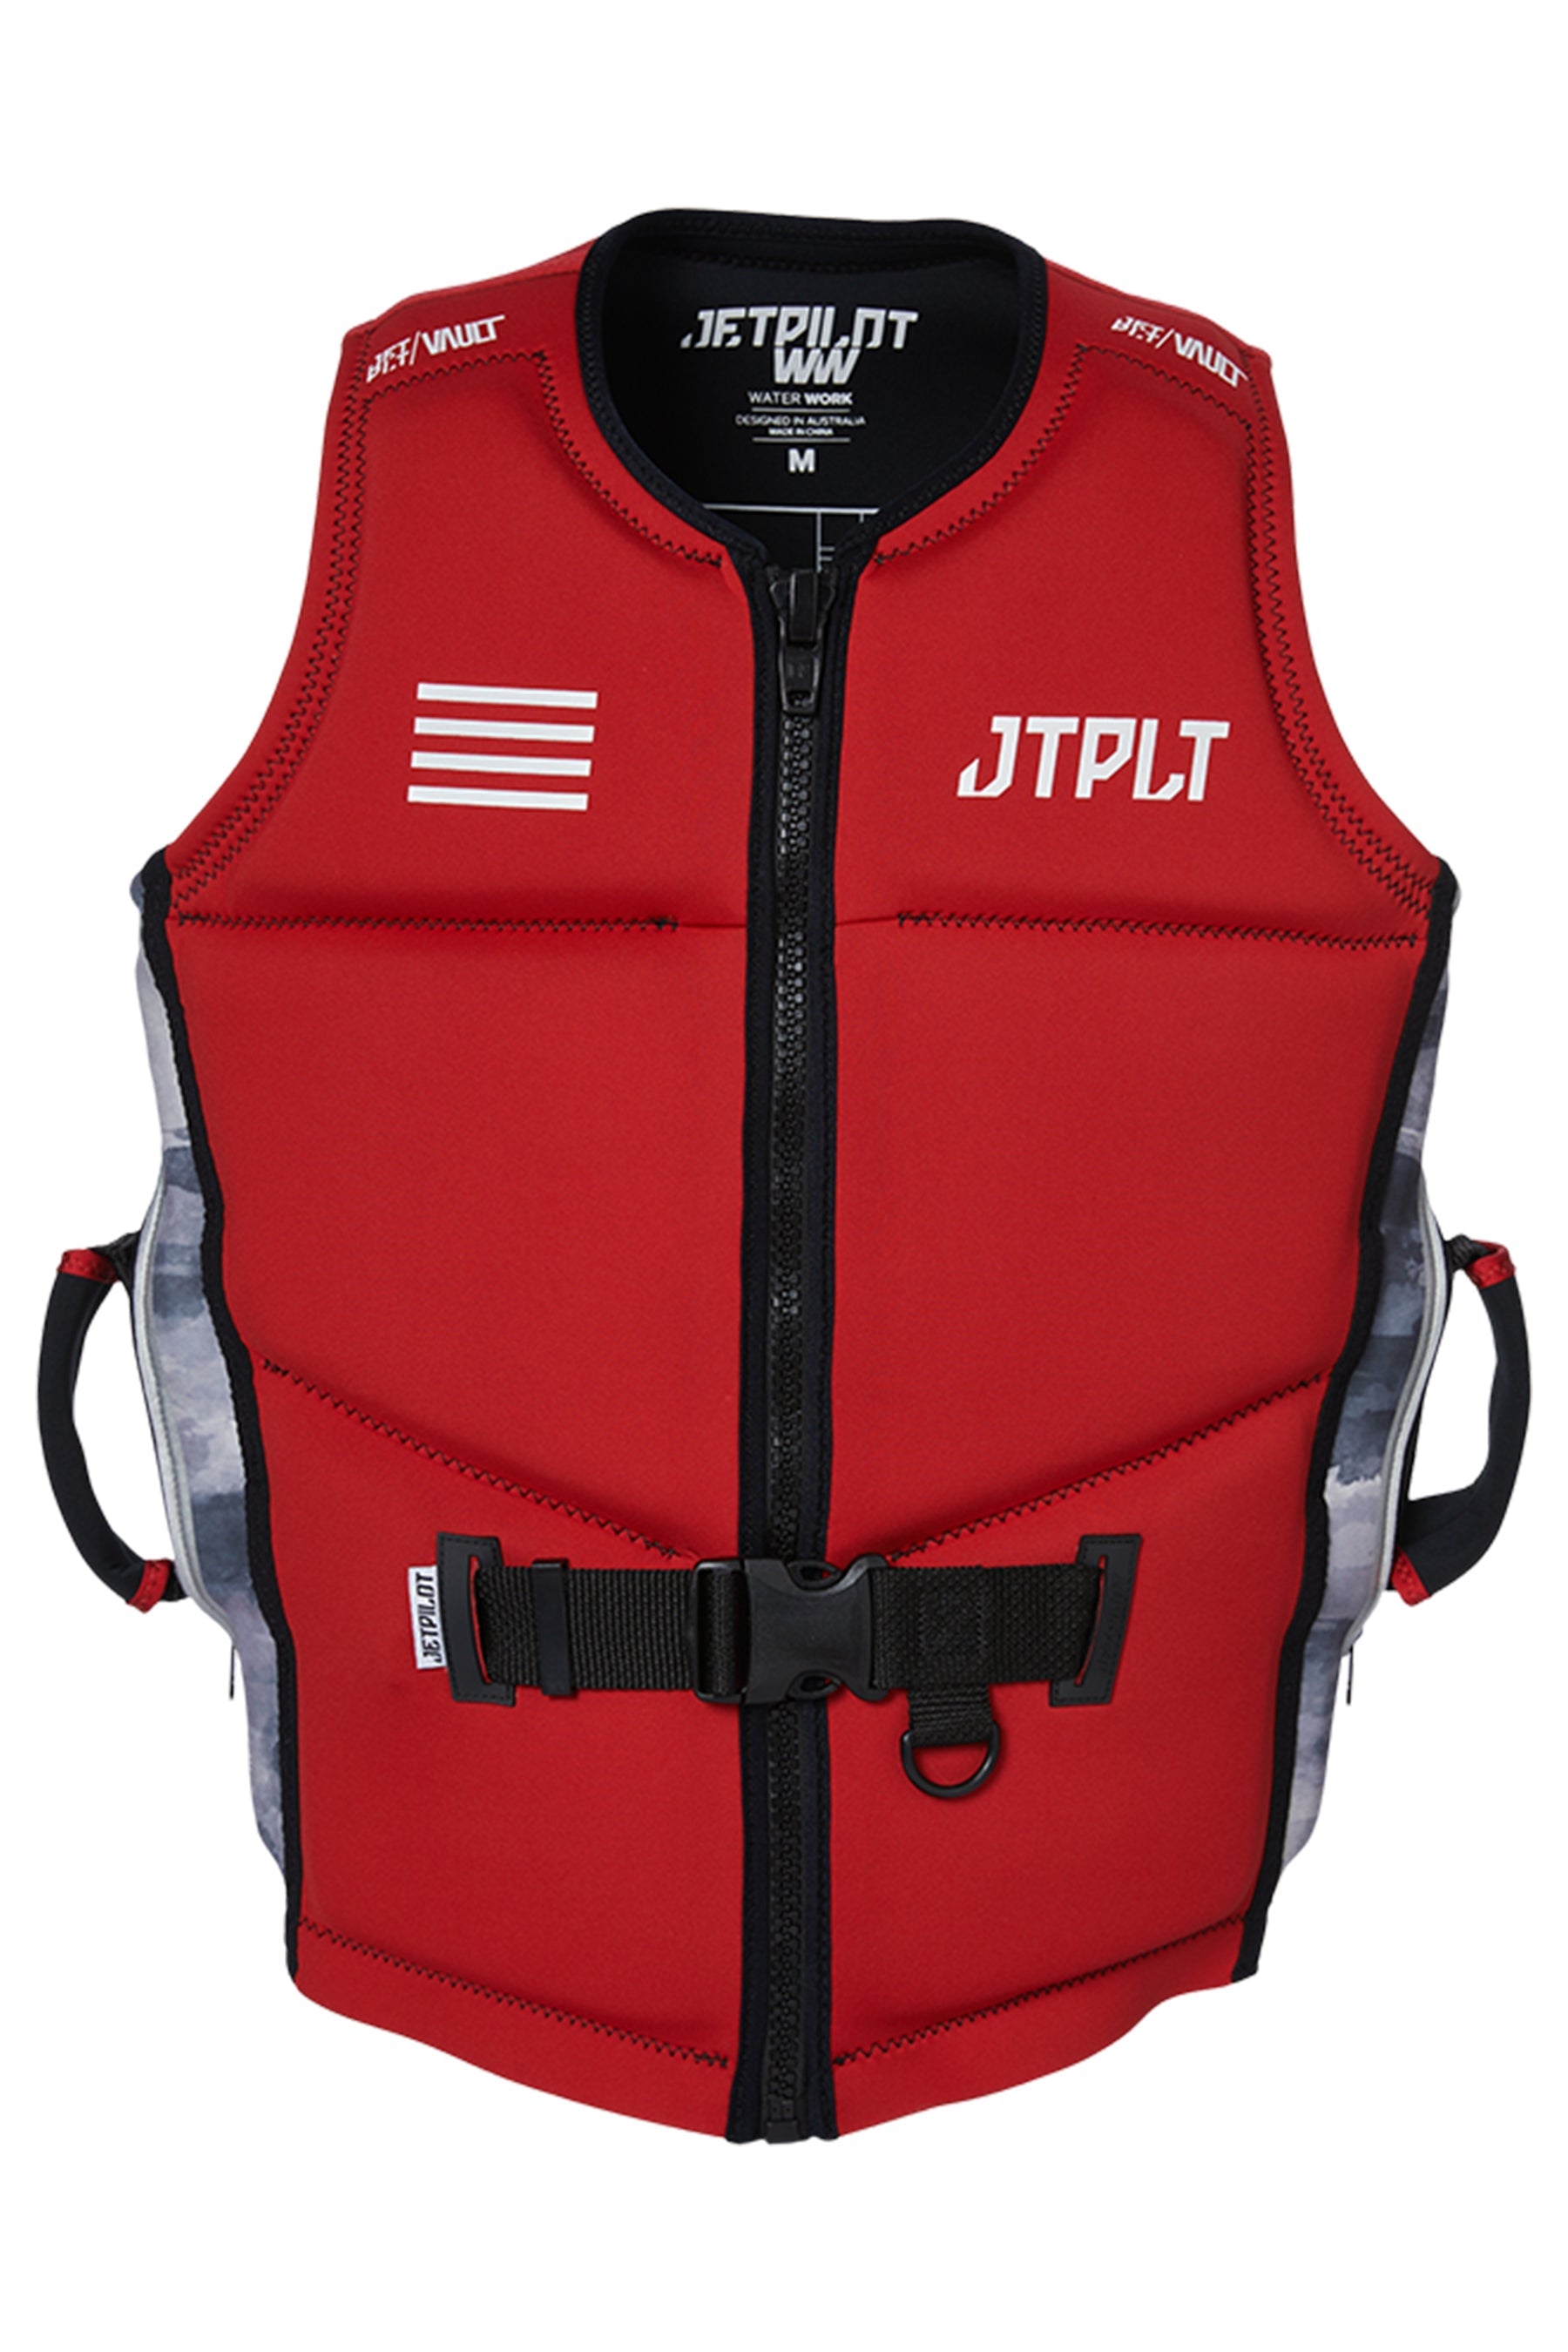 Jetpilot Rx Vault Mens F/E Neo Life Jacket Red 2